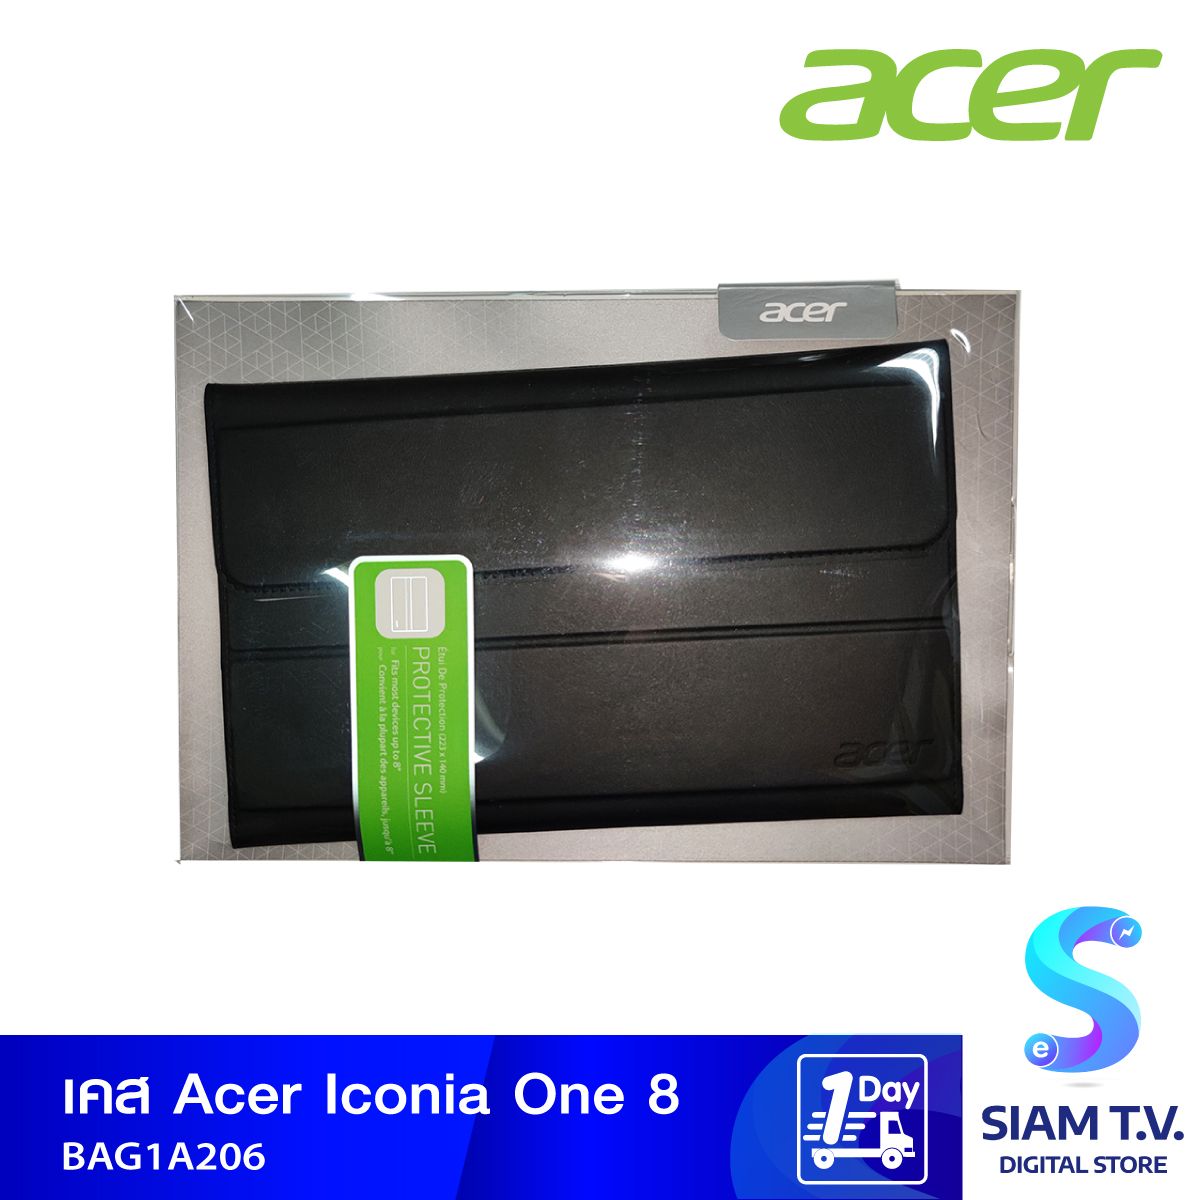 acer  Case for Tablet Acer Iconia One 8 B1-830 8.0-Inch -Black เคสแท็บเล็ต